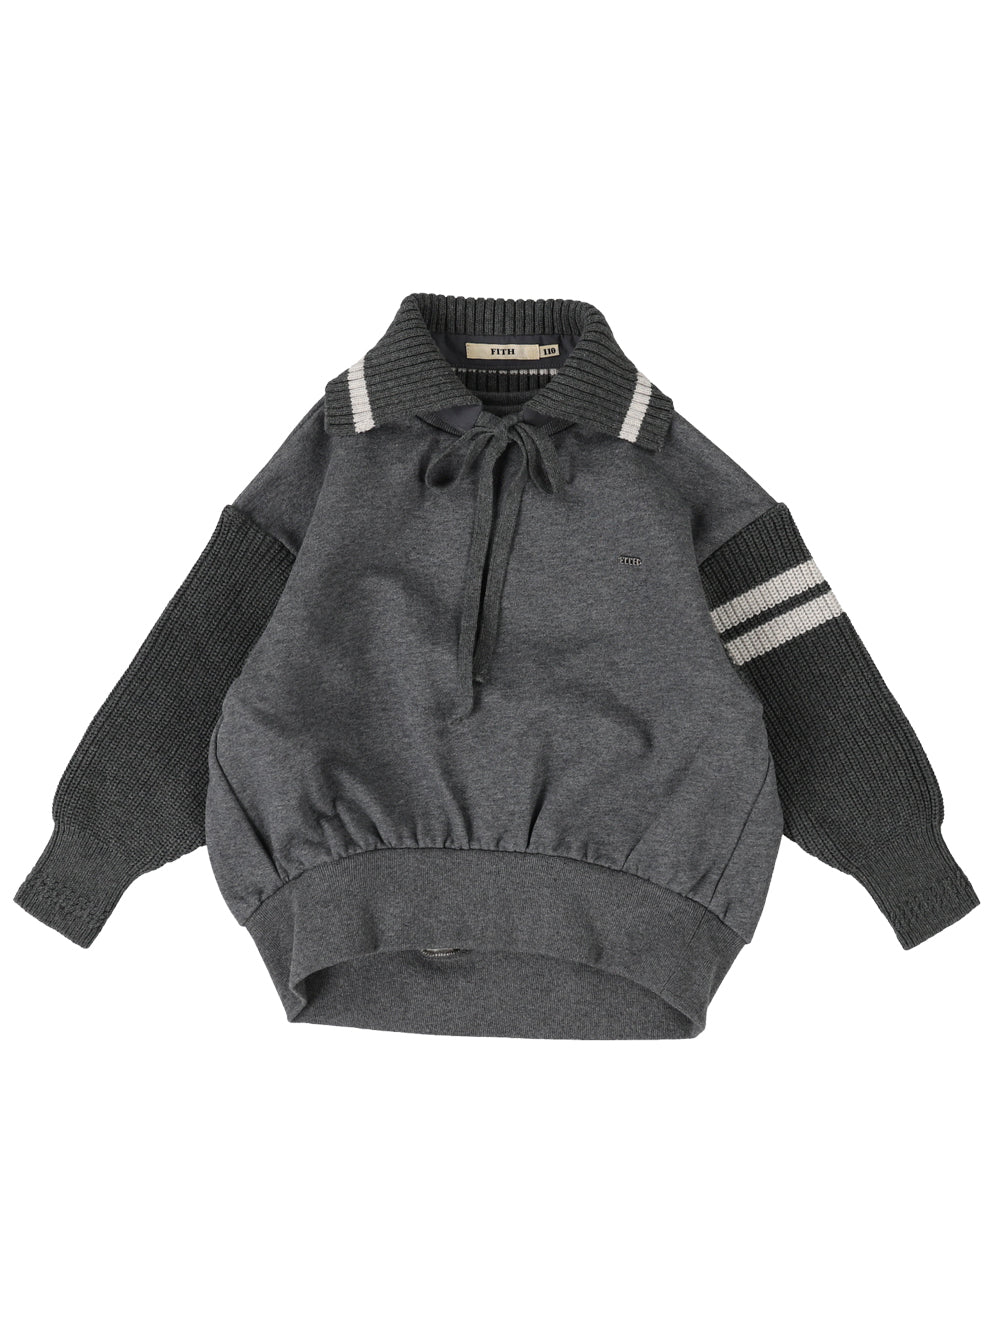 PREORDER: Knit Sleeve Grey Sweatshirt